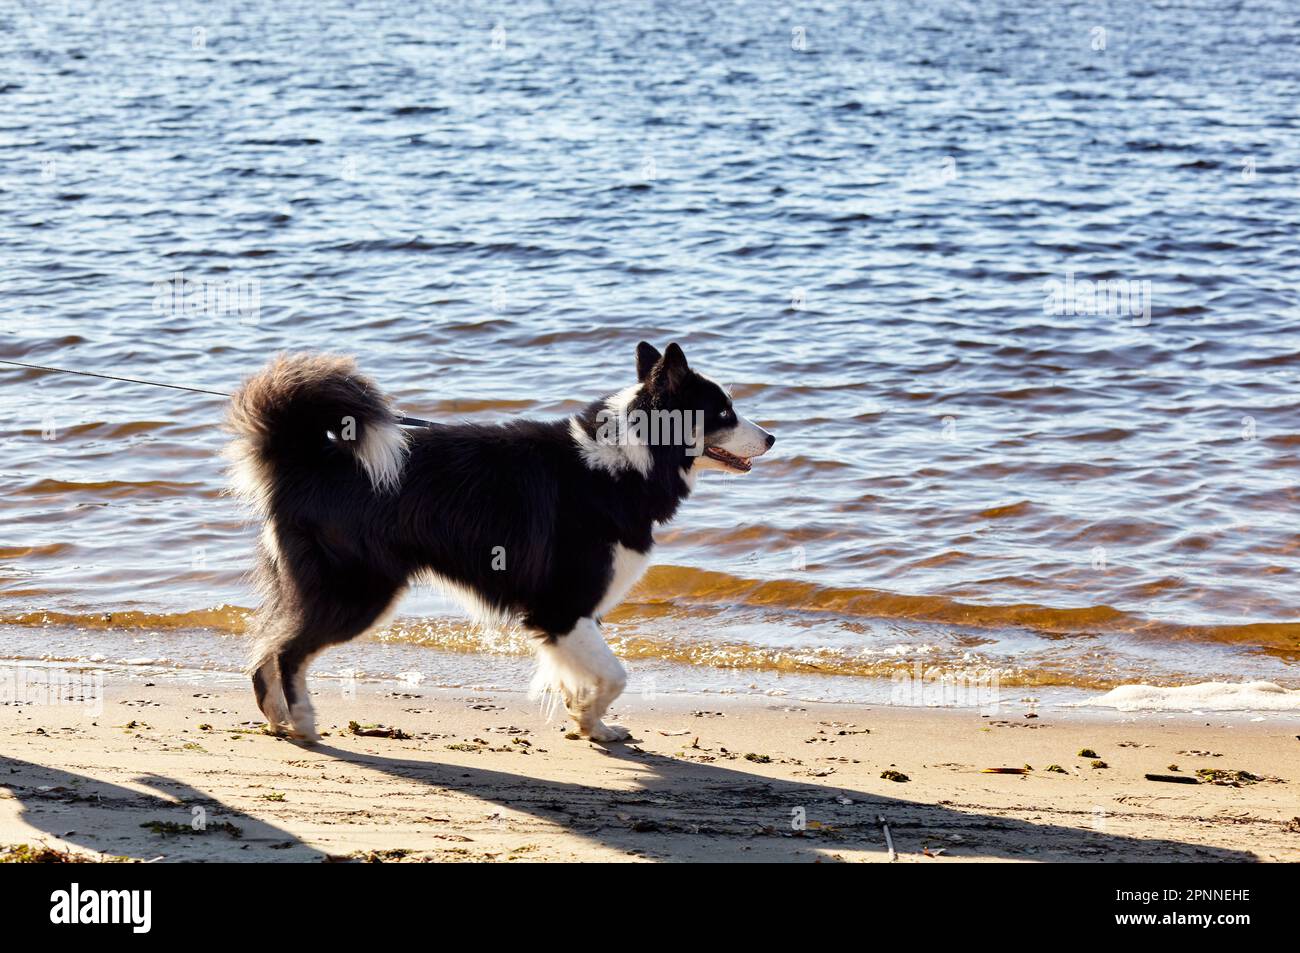 Siberian laika on a beach. Dog on nature walk Stock Photo